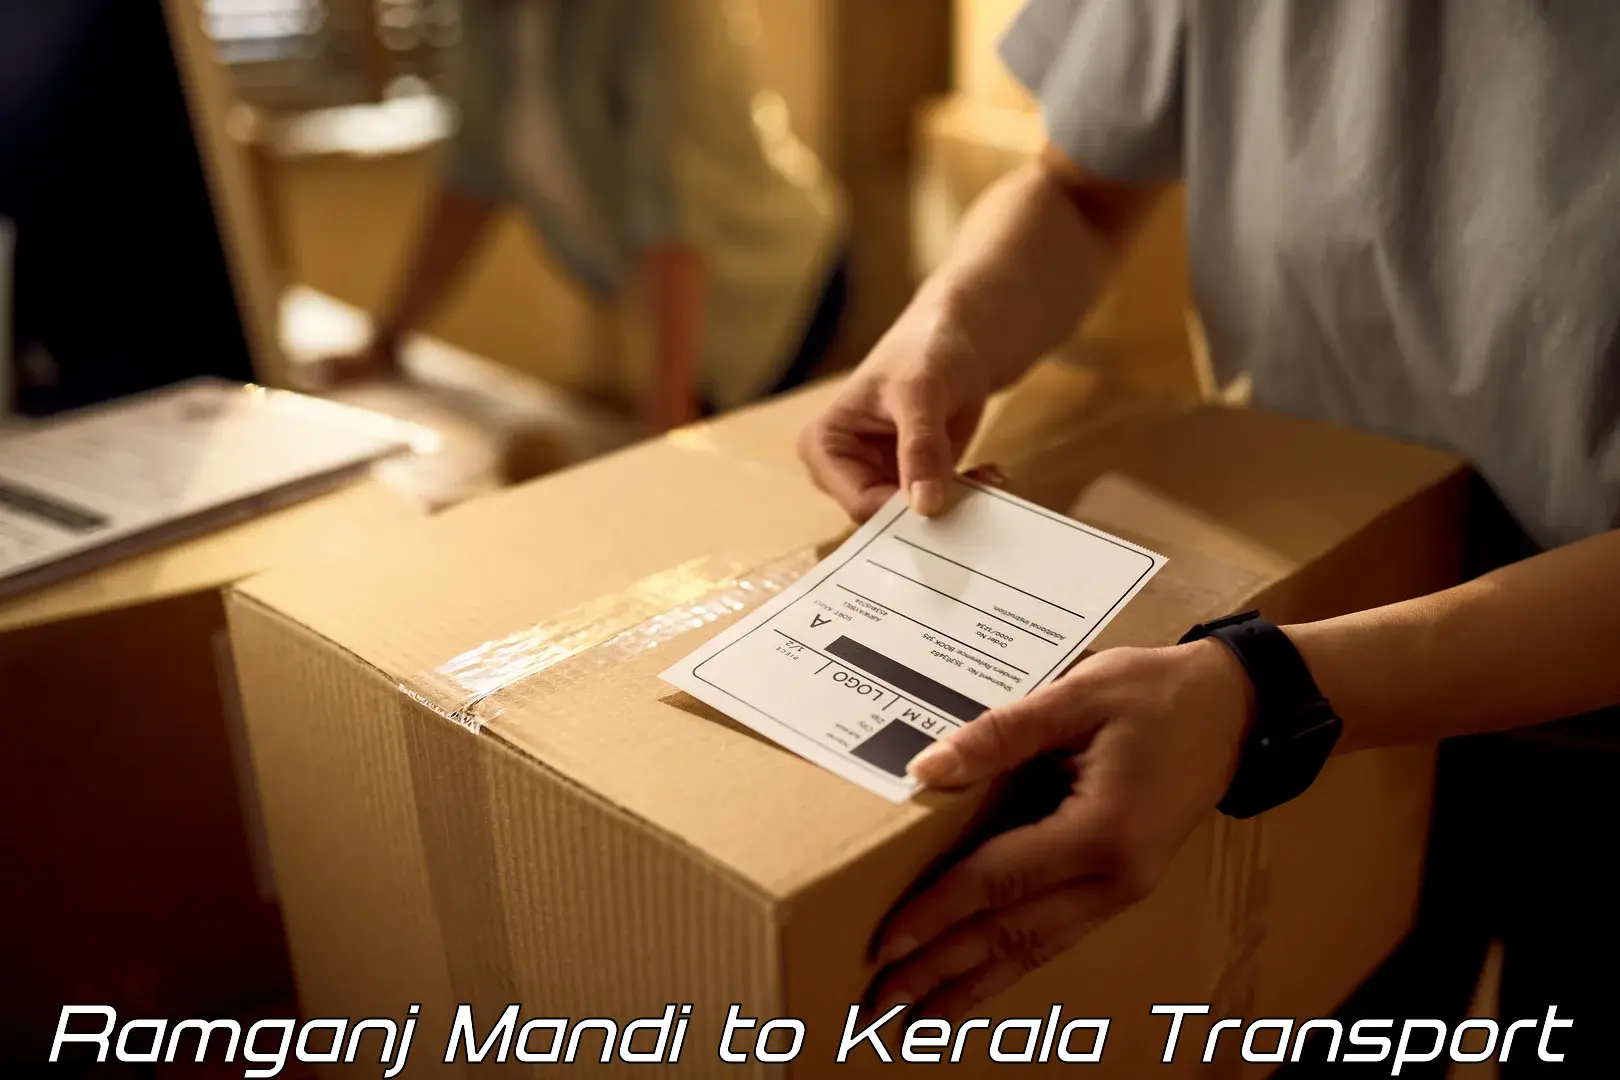 Truck transport companies in India Ramganj Mandi to Ernakulam